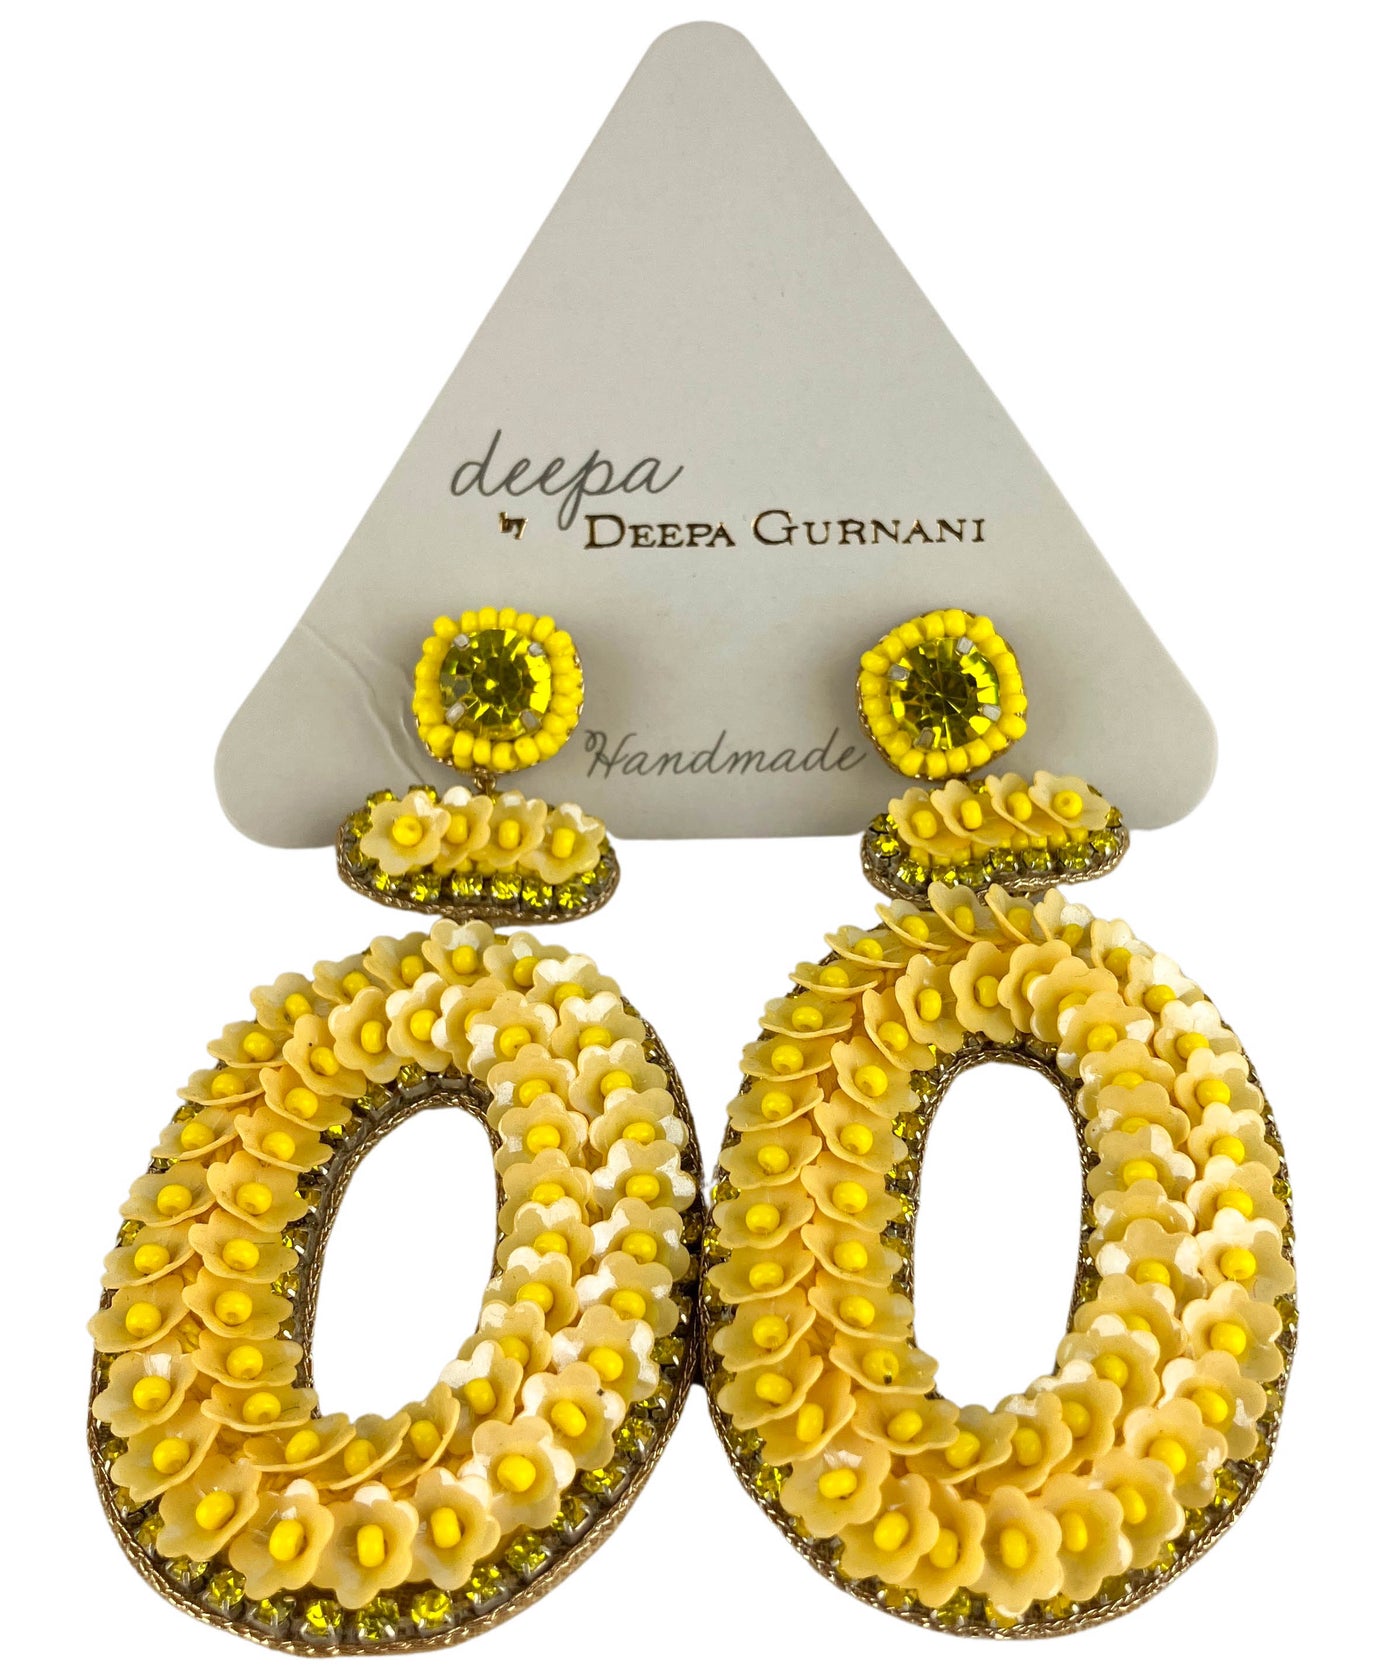 Deepa by Deepa Gurnani Britt Earrings in Yellow - Discounts on Deepa by Deepa Gurnani at UAL